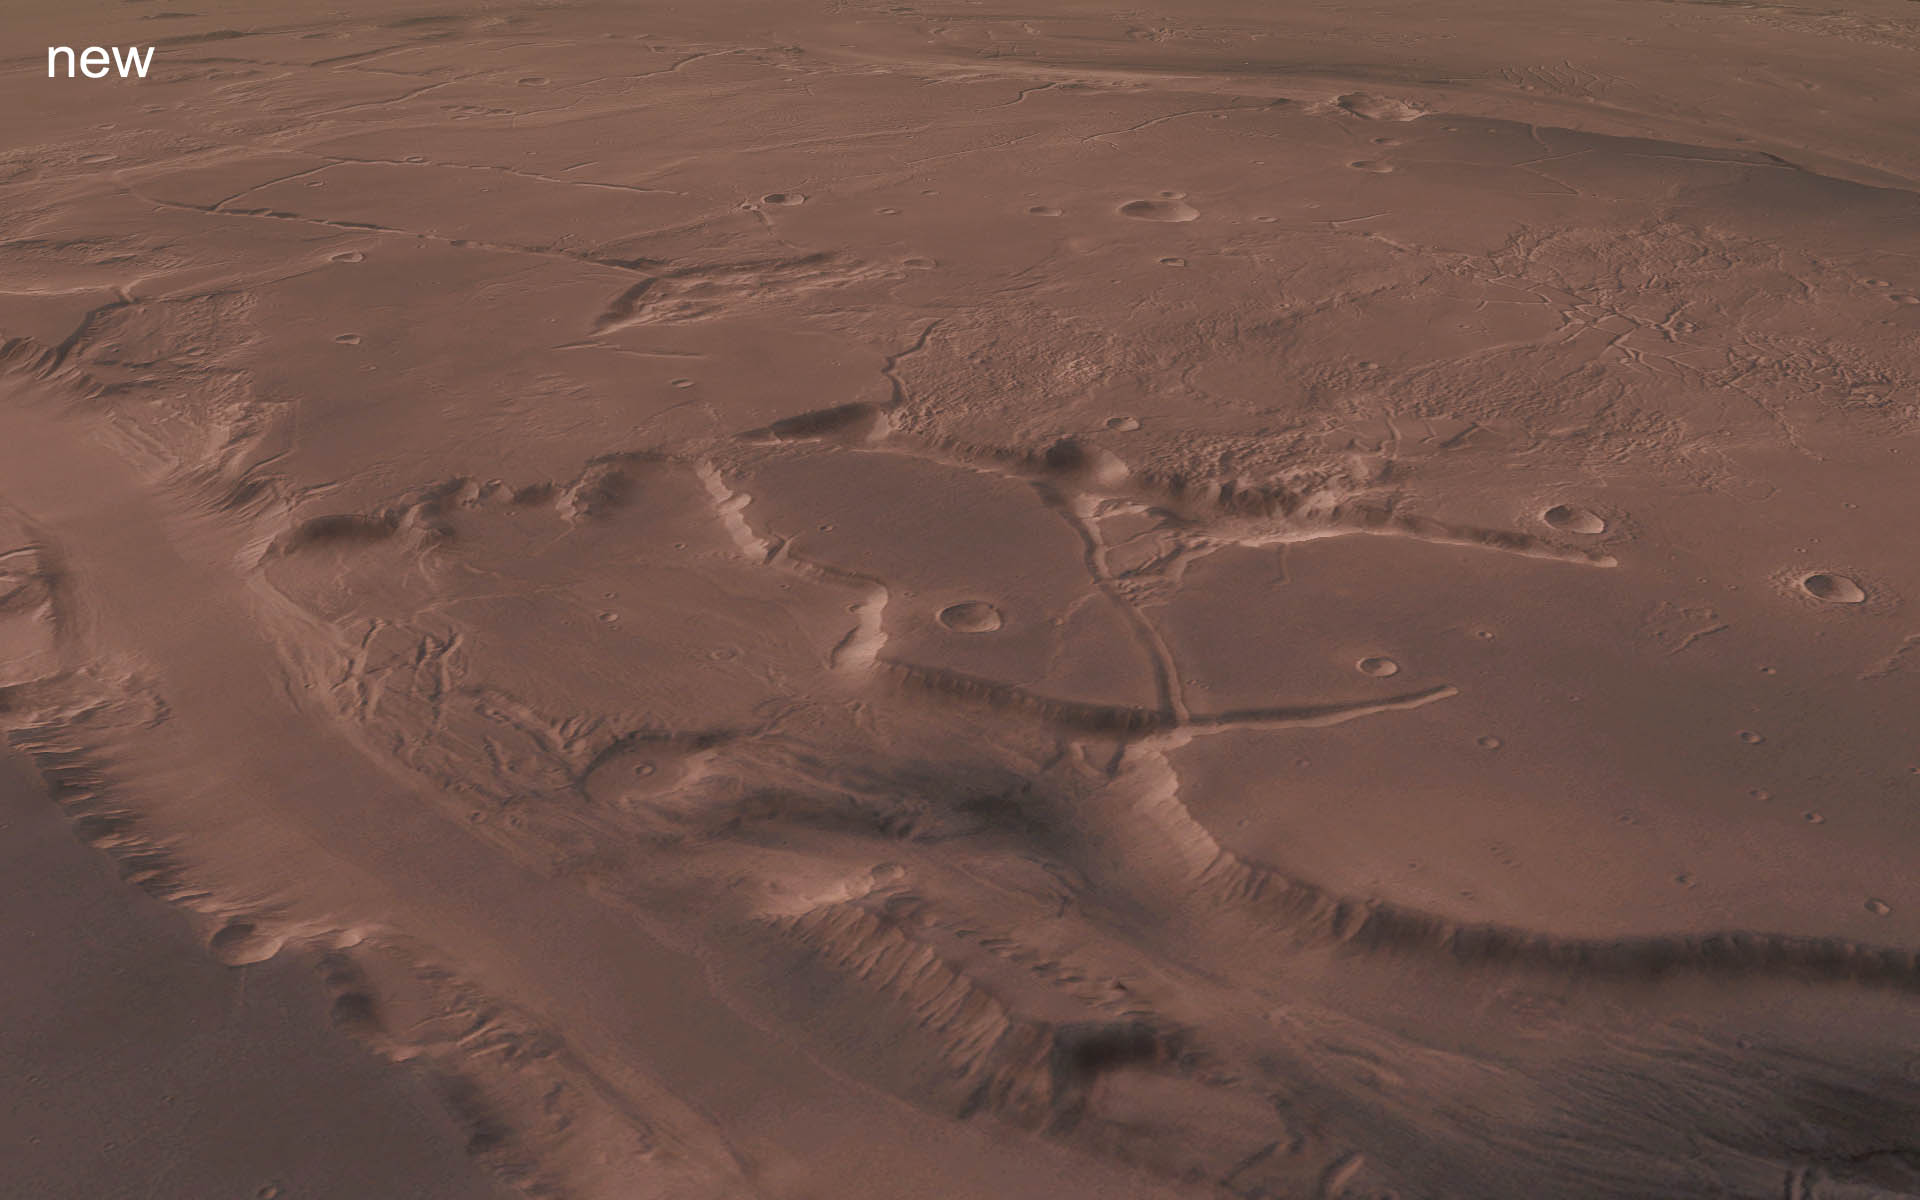 Mars texture updates: new